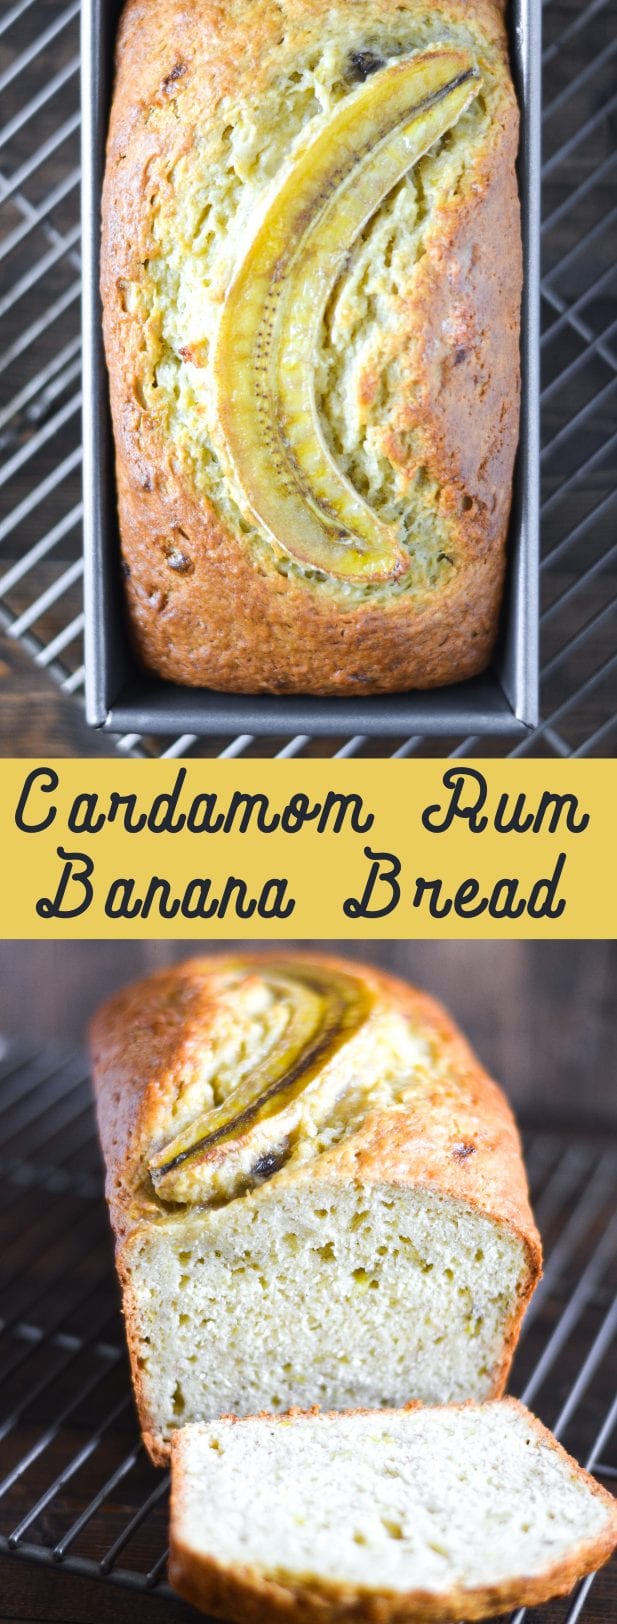 Cardamom Rum Banana Bread